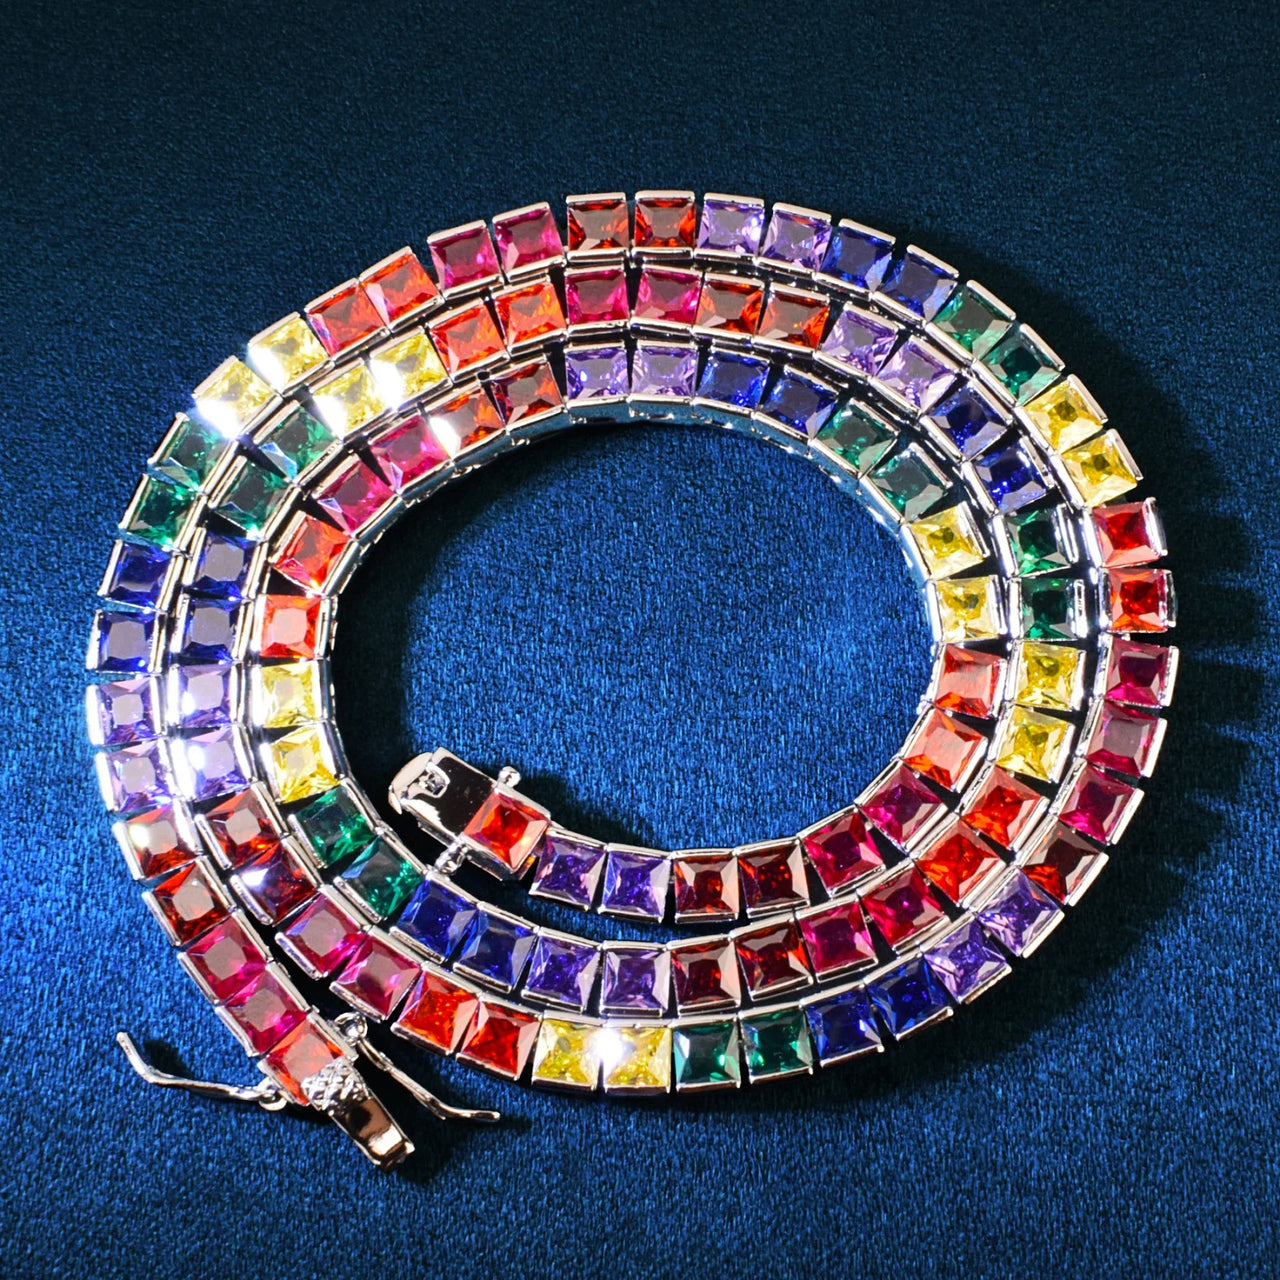 4mm Multi Color Square Tennis Chain - Different Drips